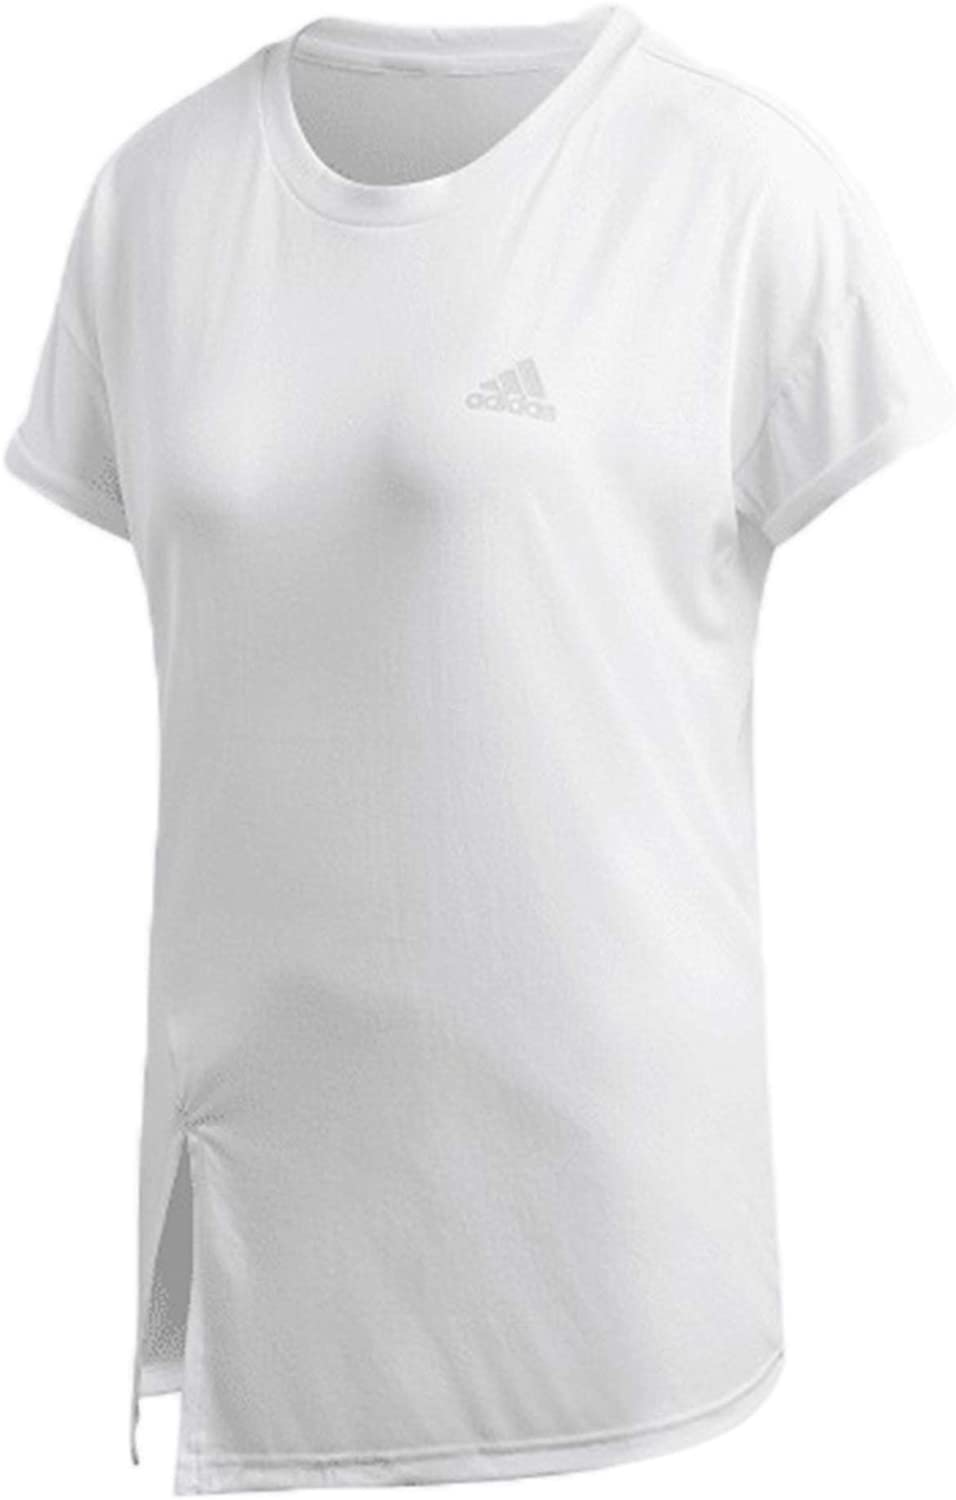 adidas Womens Athletics T-Shirt - image 1 of 1